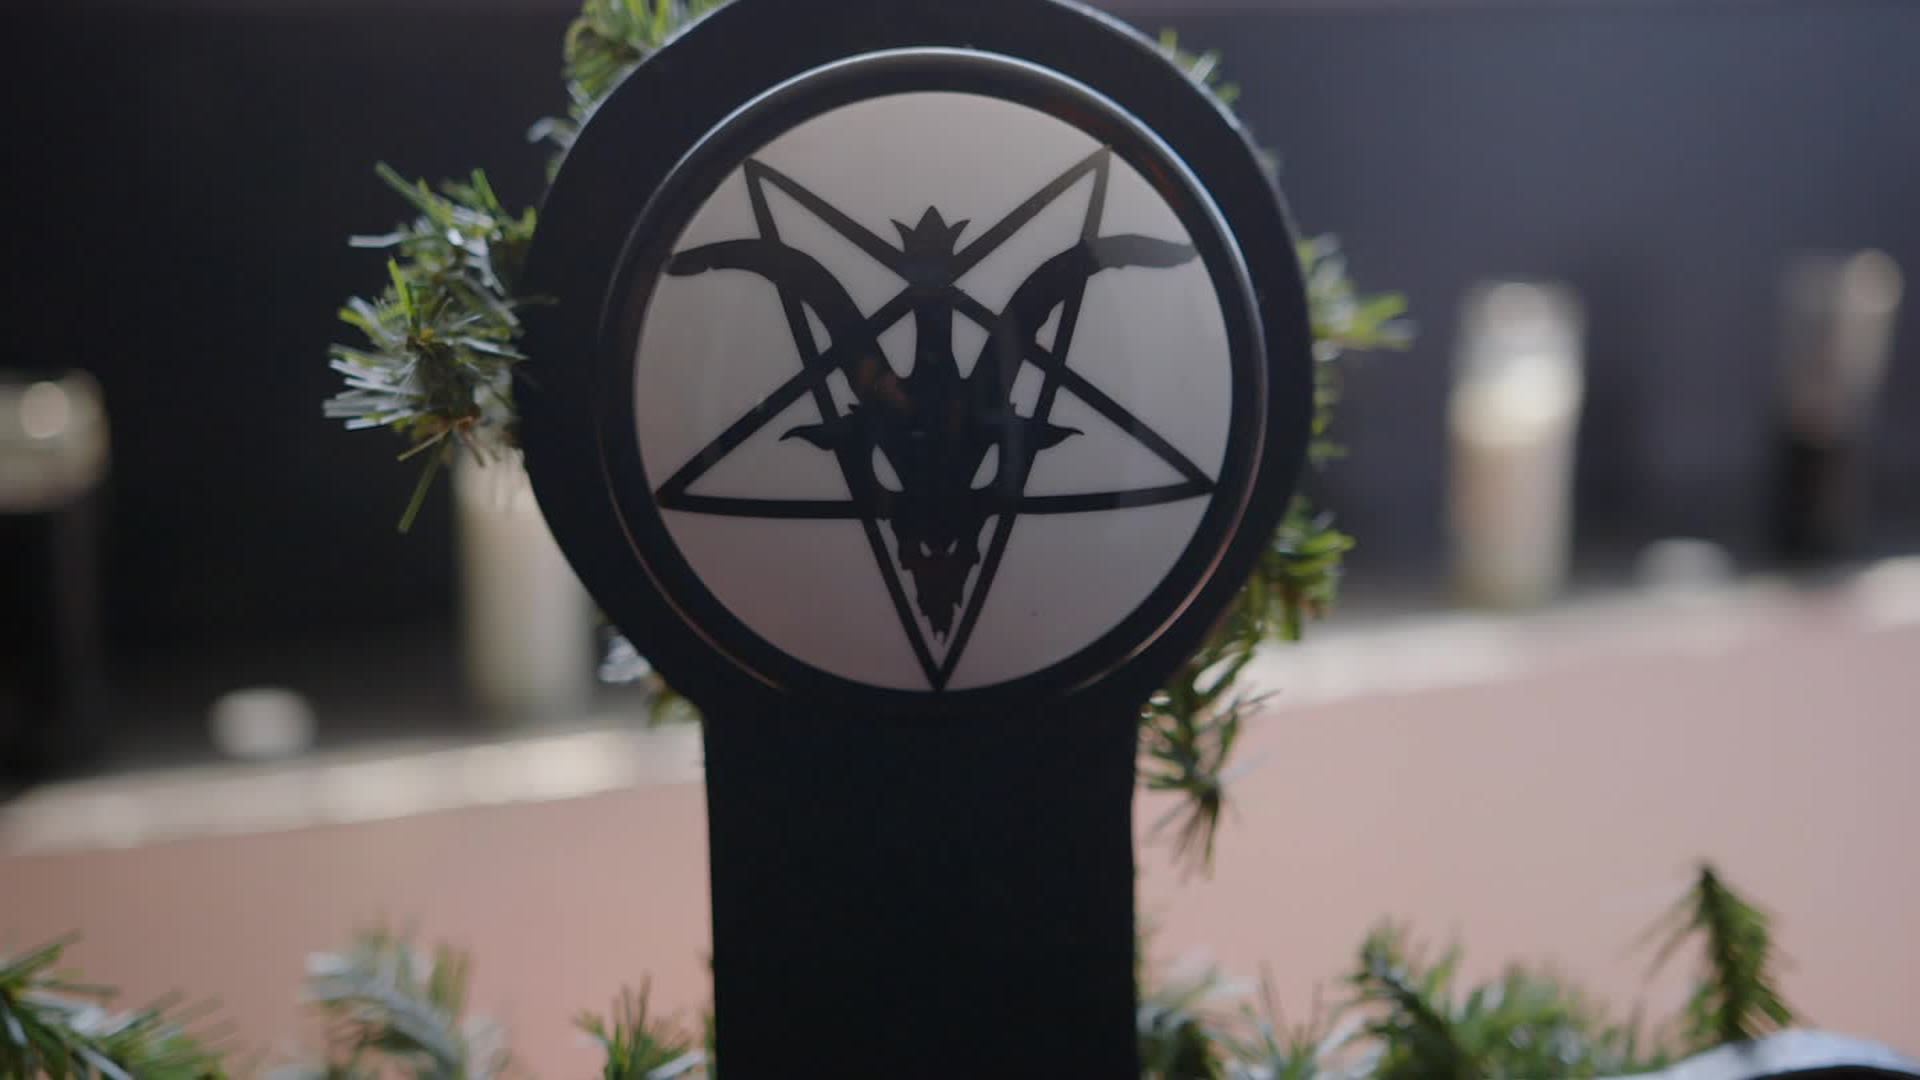 devil worship symbol